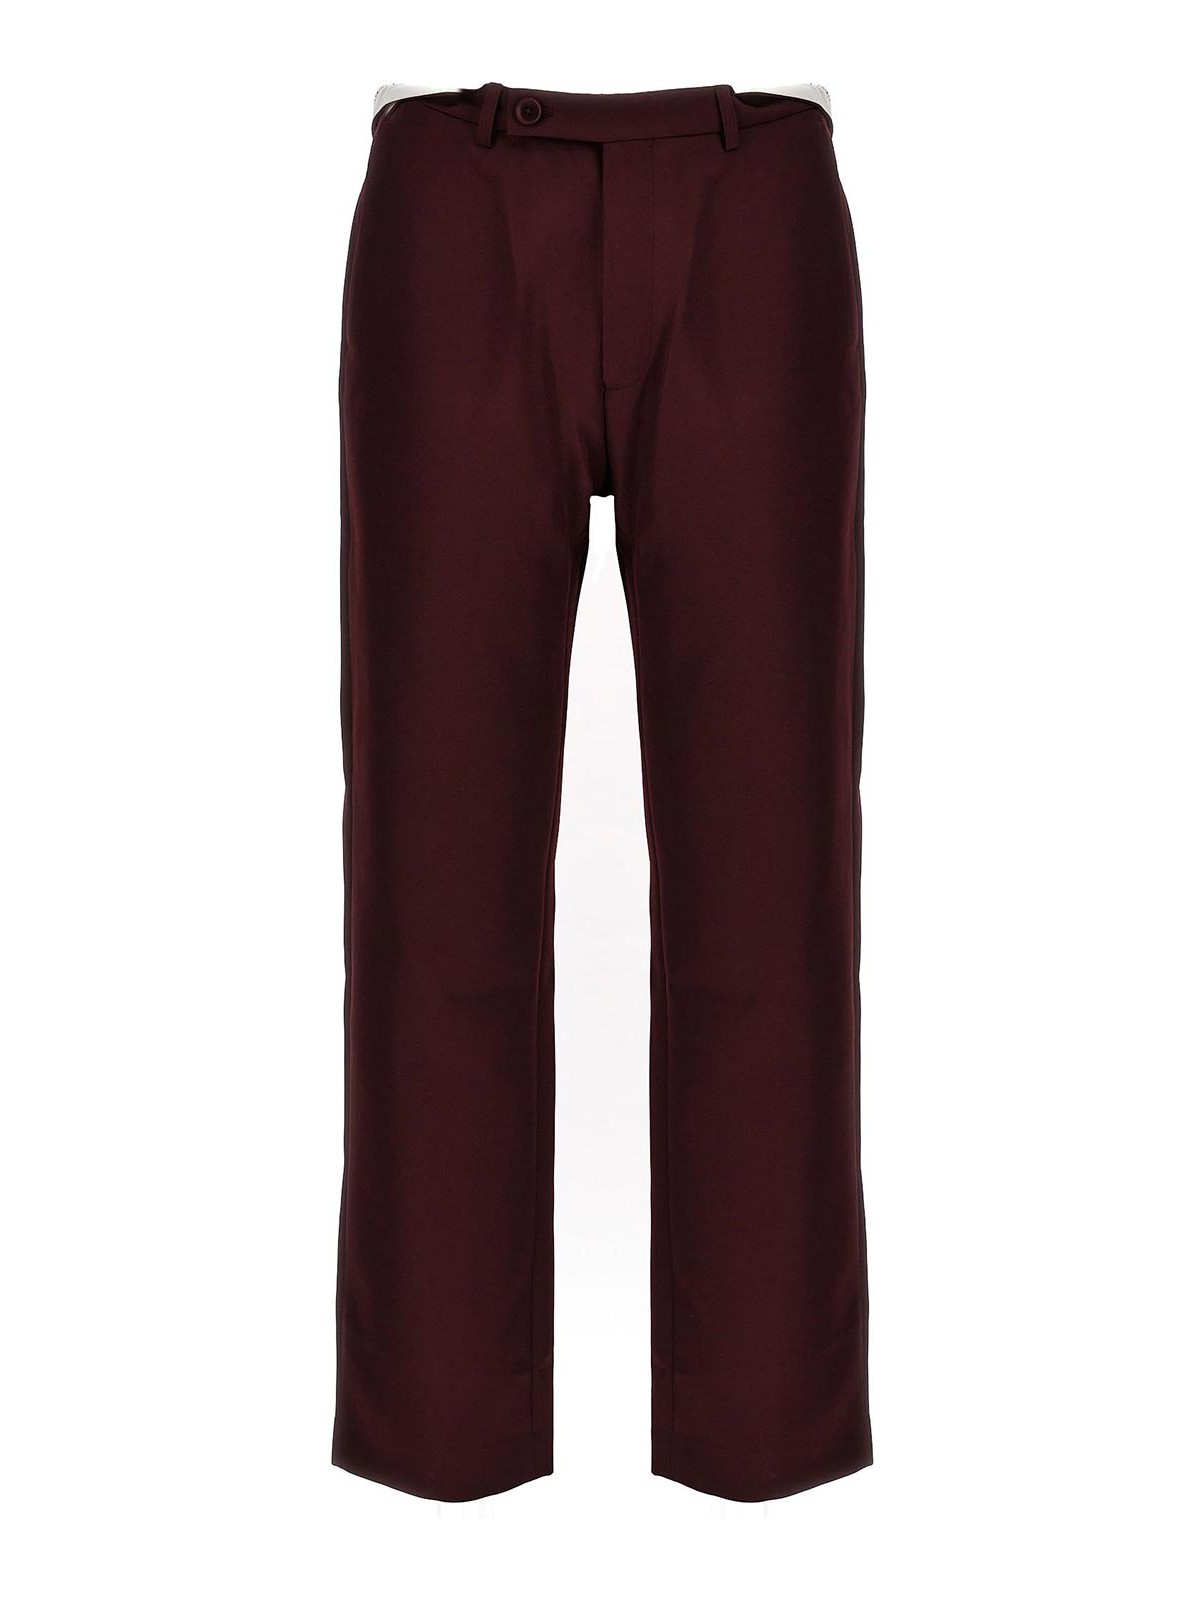 Women's Cargo Pants Spring Print Rolled Slacks Trousers Fashion XS-L | eBay